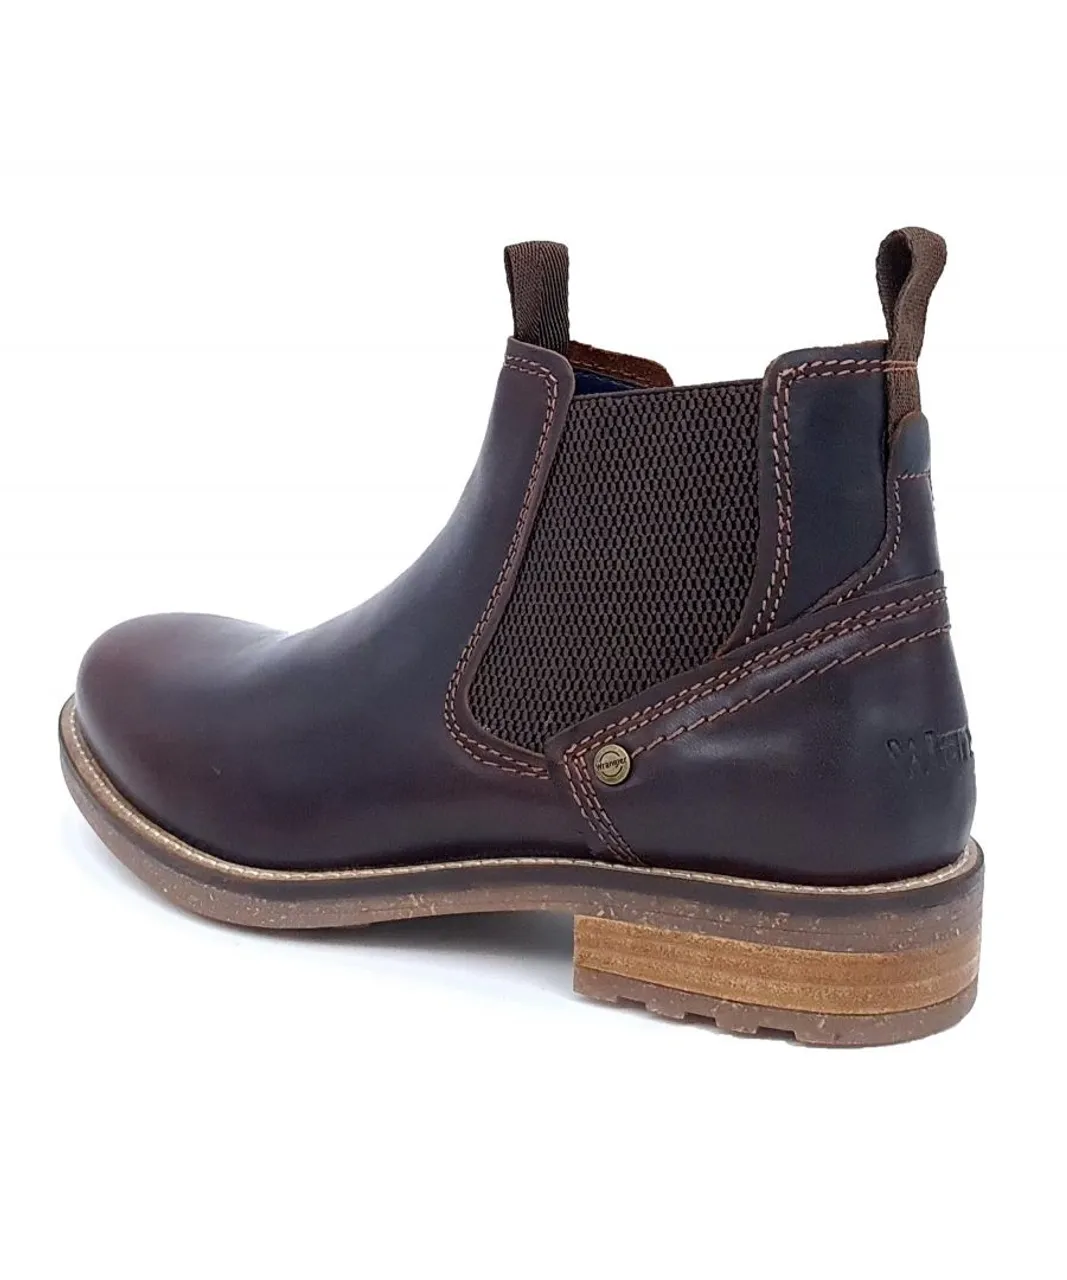 Wrangler Hill Chelsea Leather Bordo Mens Boots